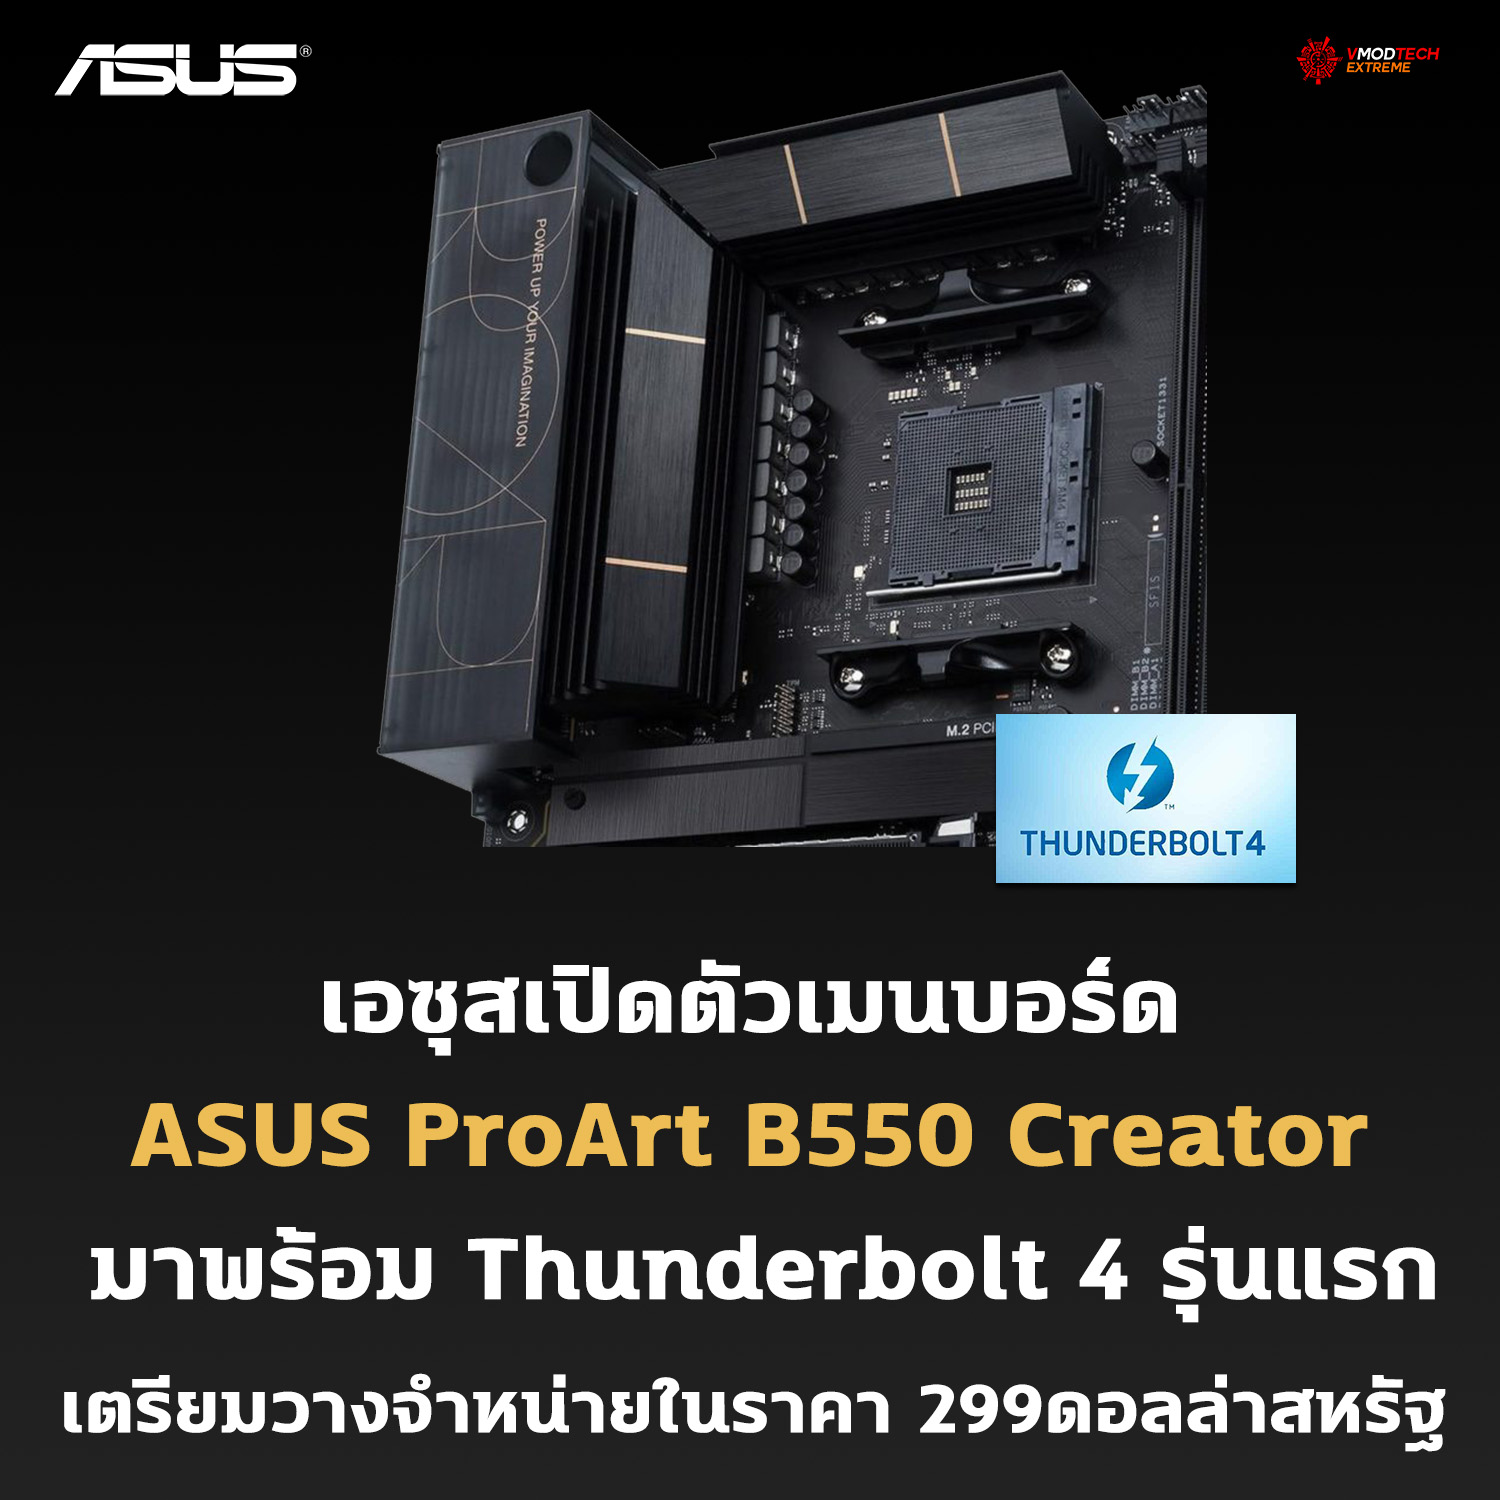 asus proart b550 creator เอซุสเปิดตัวเมนบอร์ด ASUS ProArt B550 Creator มาพร้อม Thunderbolt 4 รุ่นใหม่ล่าสุดให้ใช้งานแบบเต็มๆ 